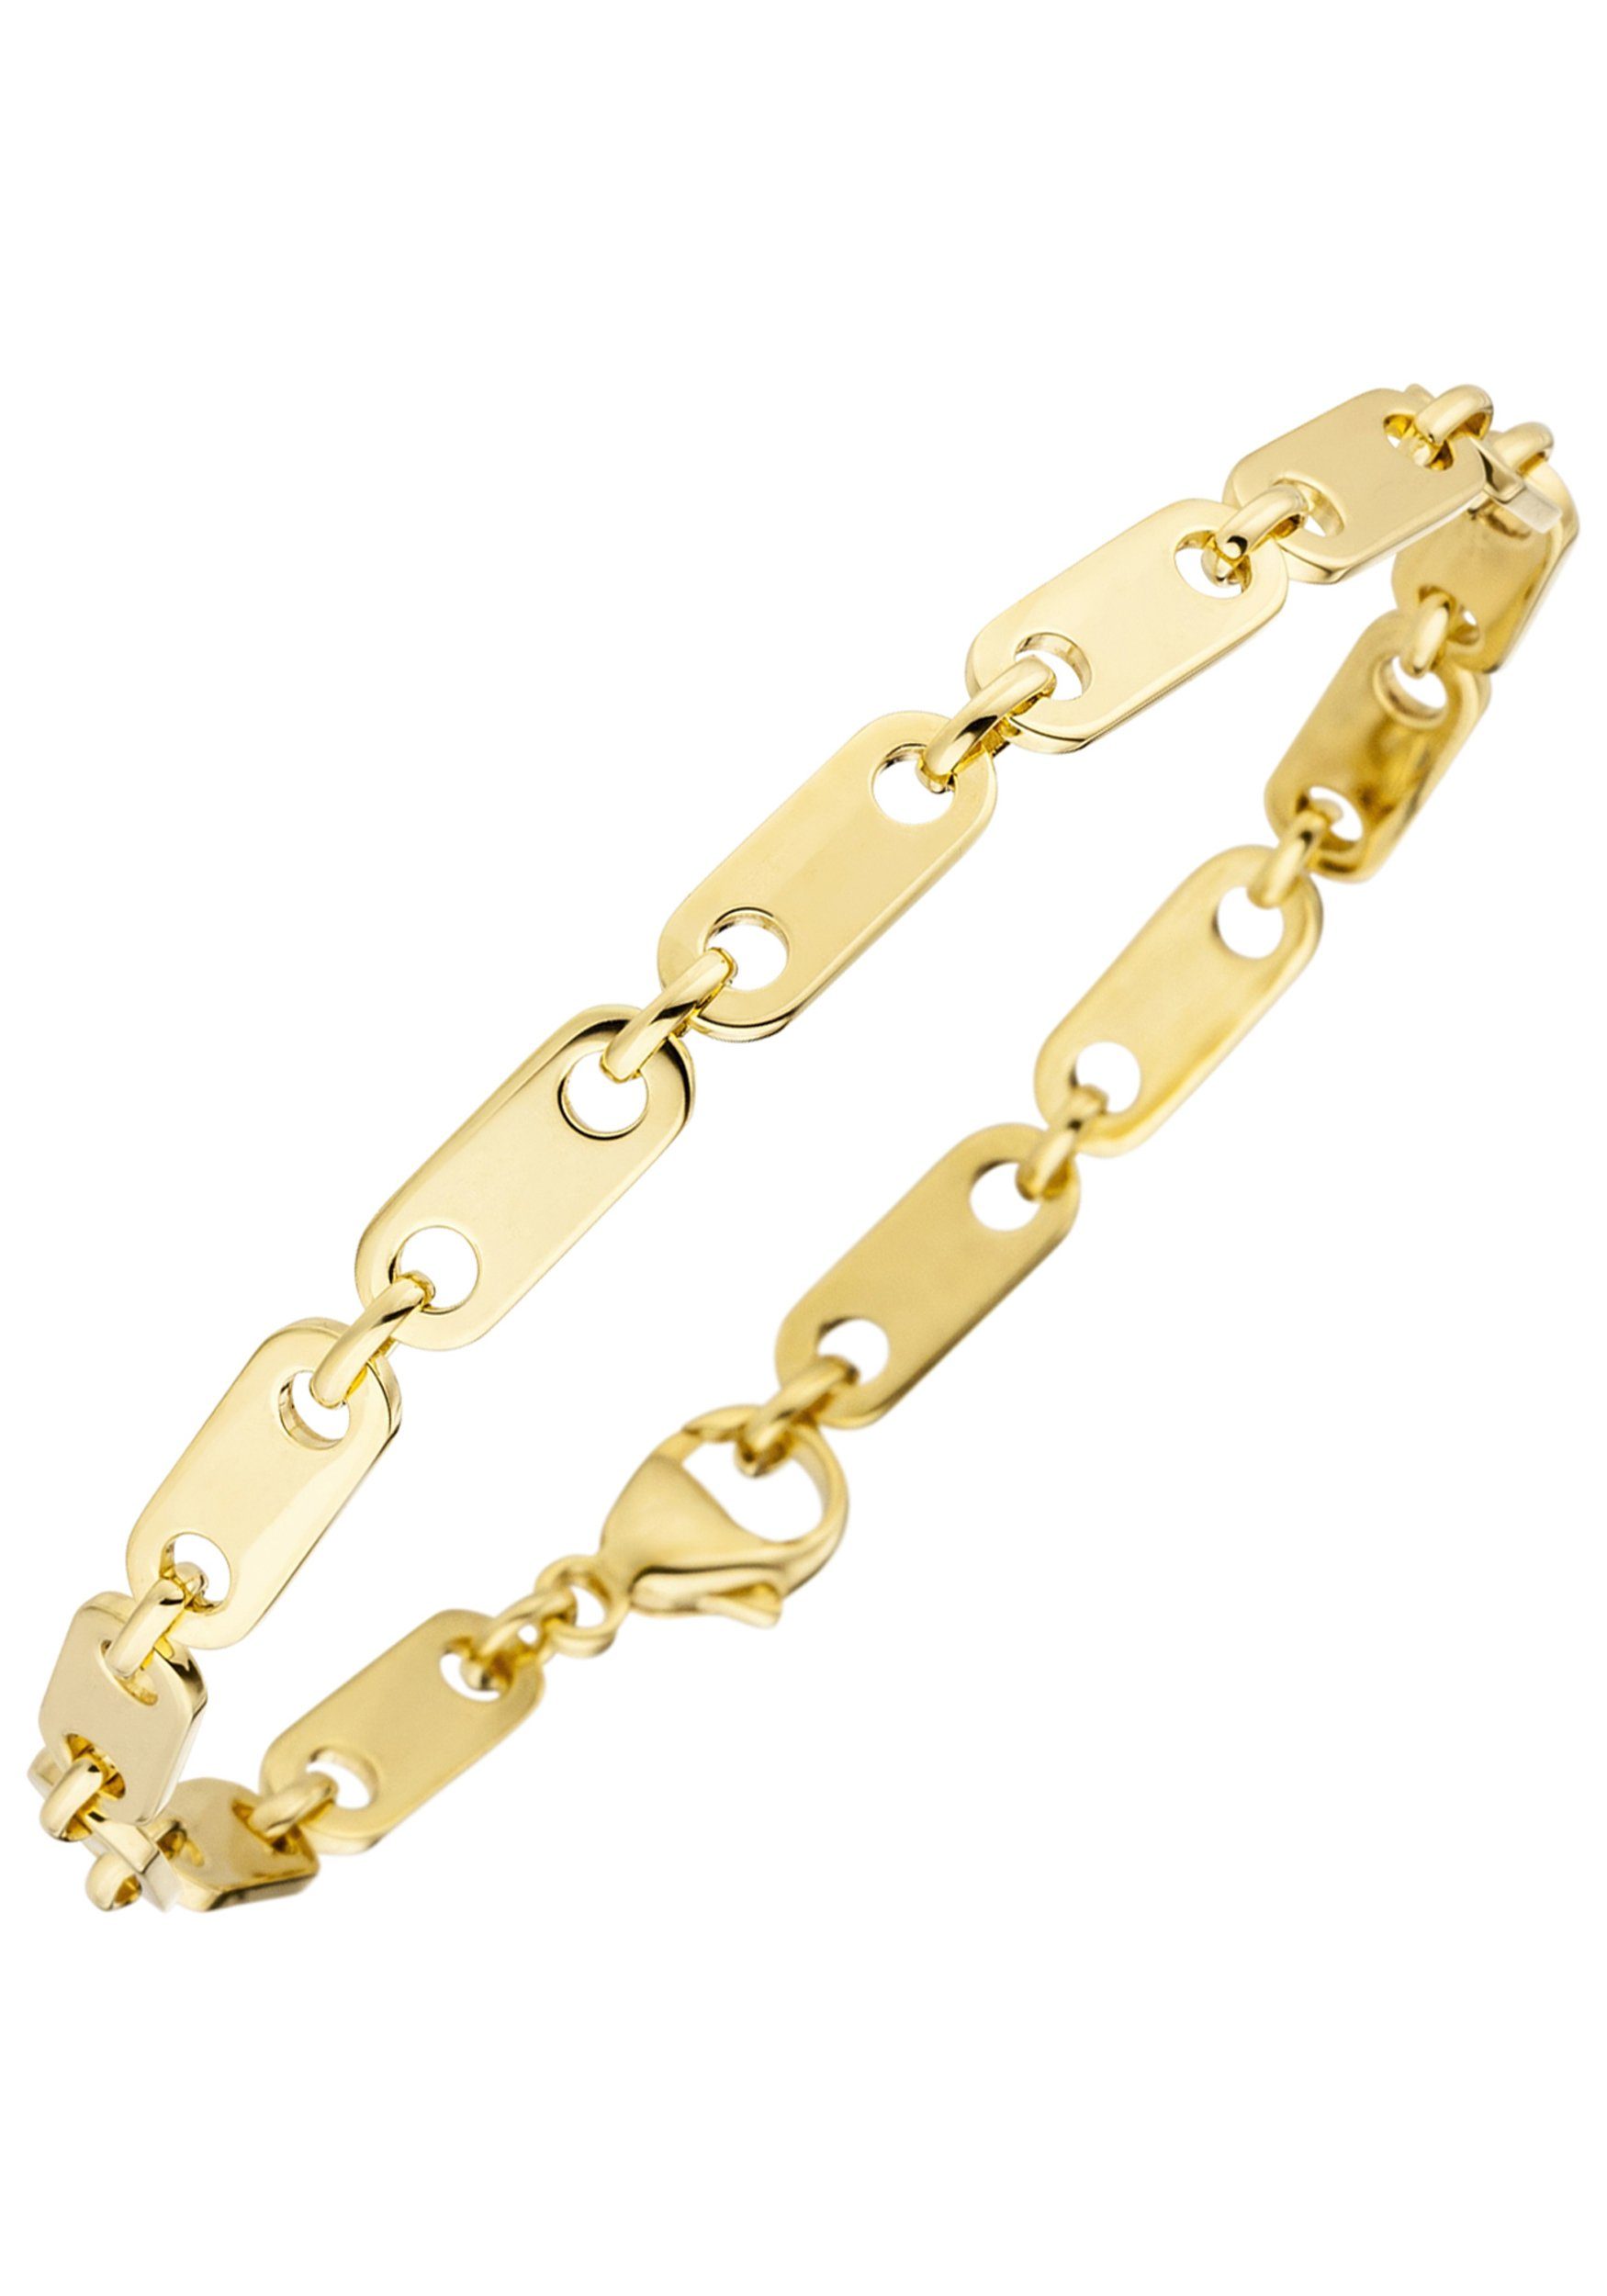 JOBO Goldarmband, 585 Gold 21 cm online kaufen | OTTO